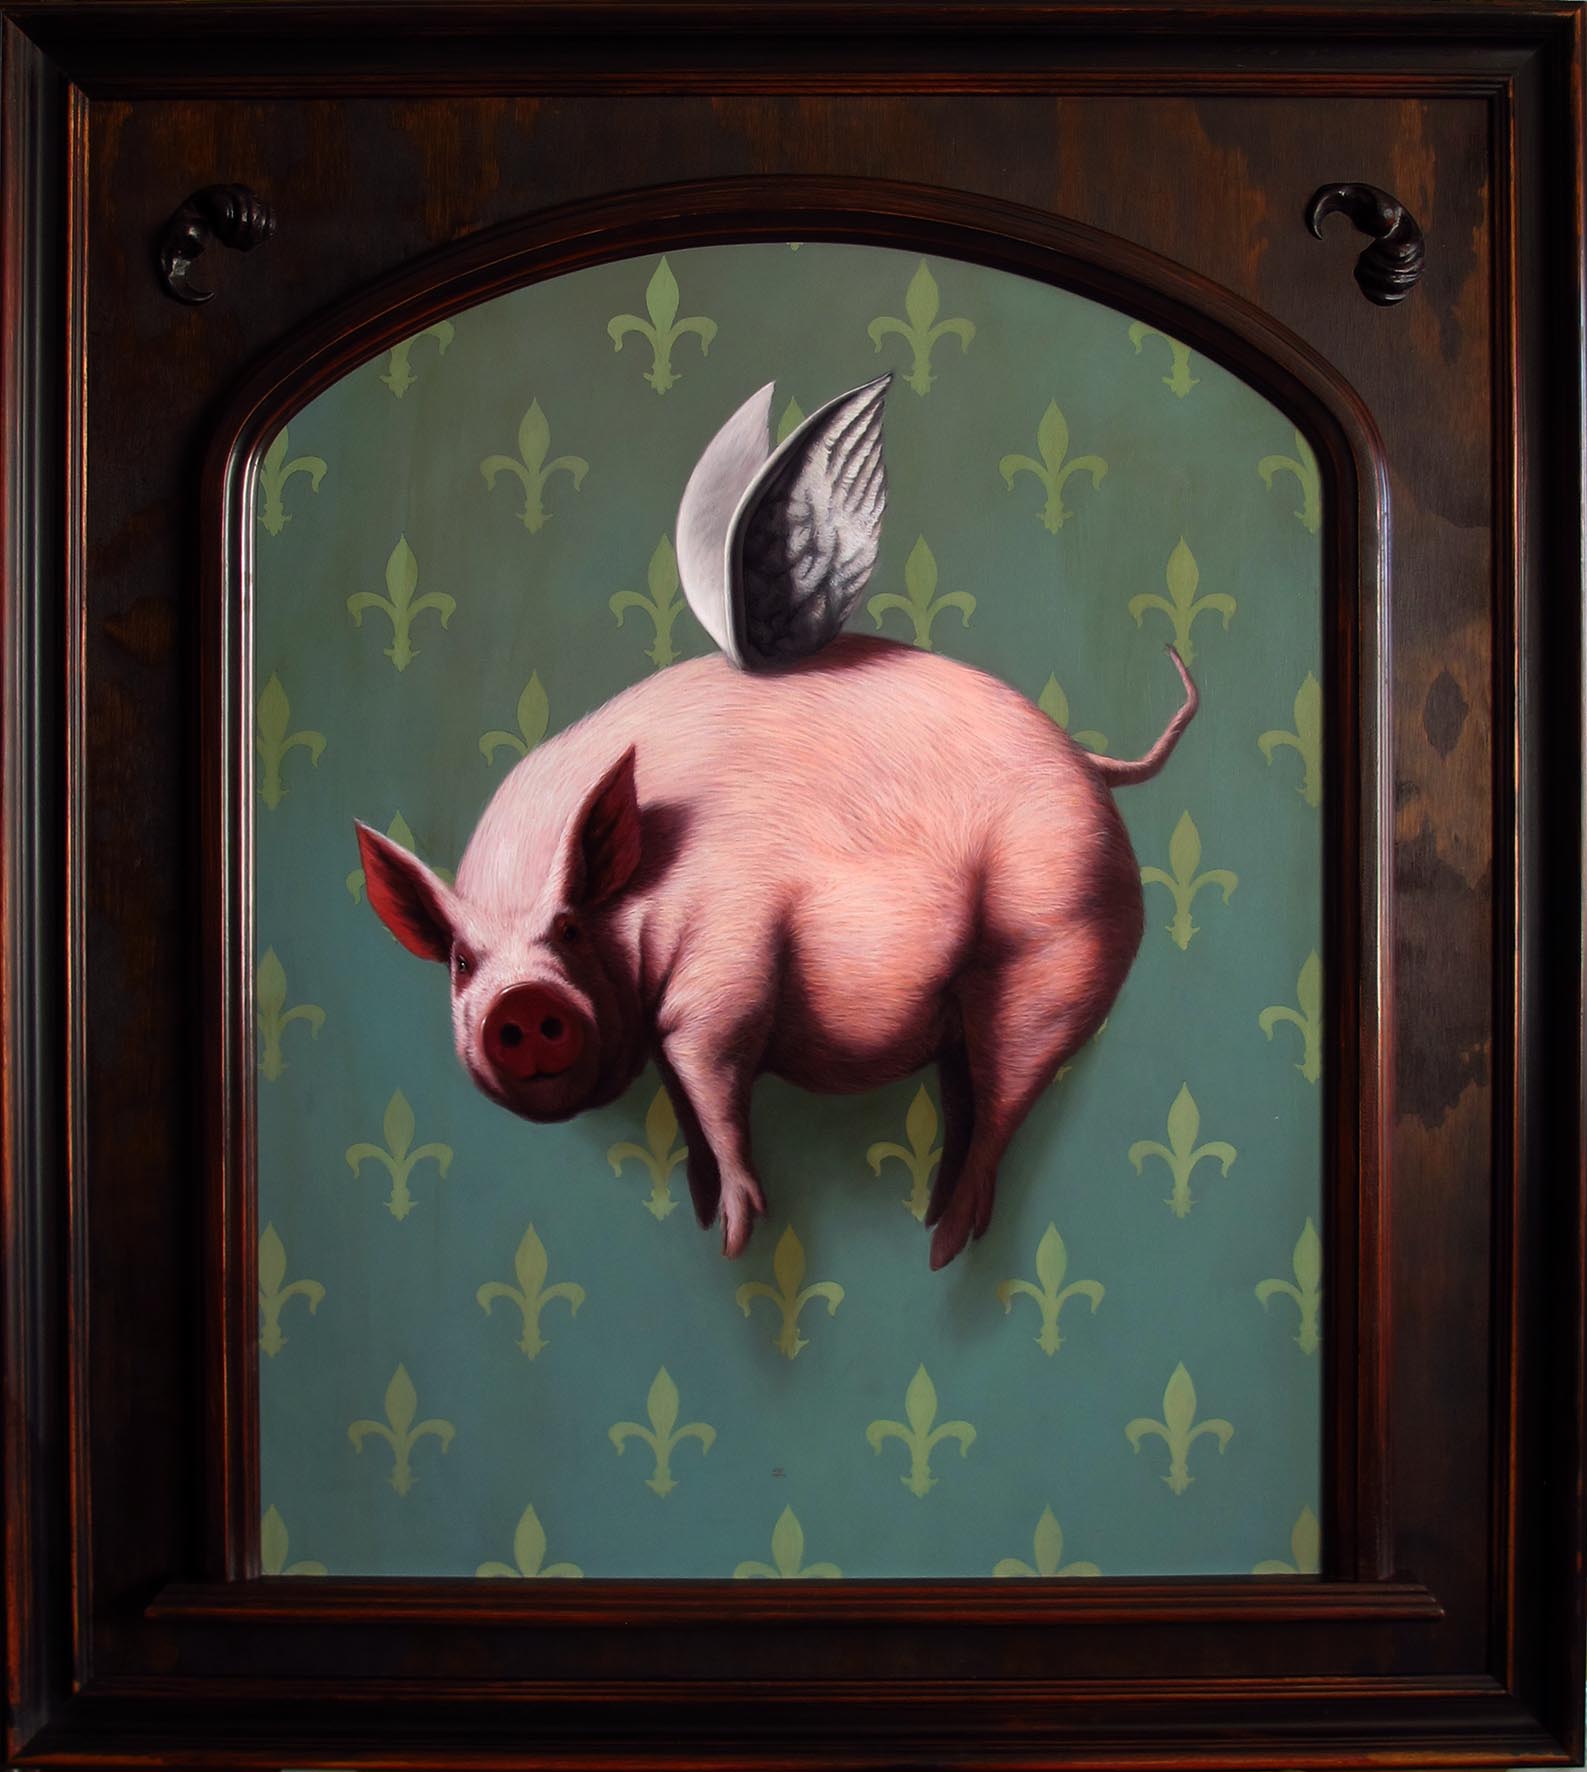 Flying Pig By Daniel Sueiras Fanjul images/Urbane Art Gallery Flying Pig By Daniel Sueiras Fanjul.jpg